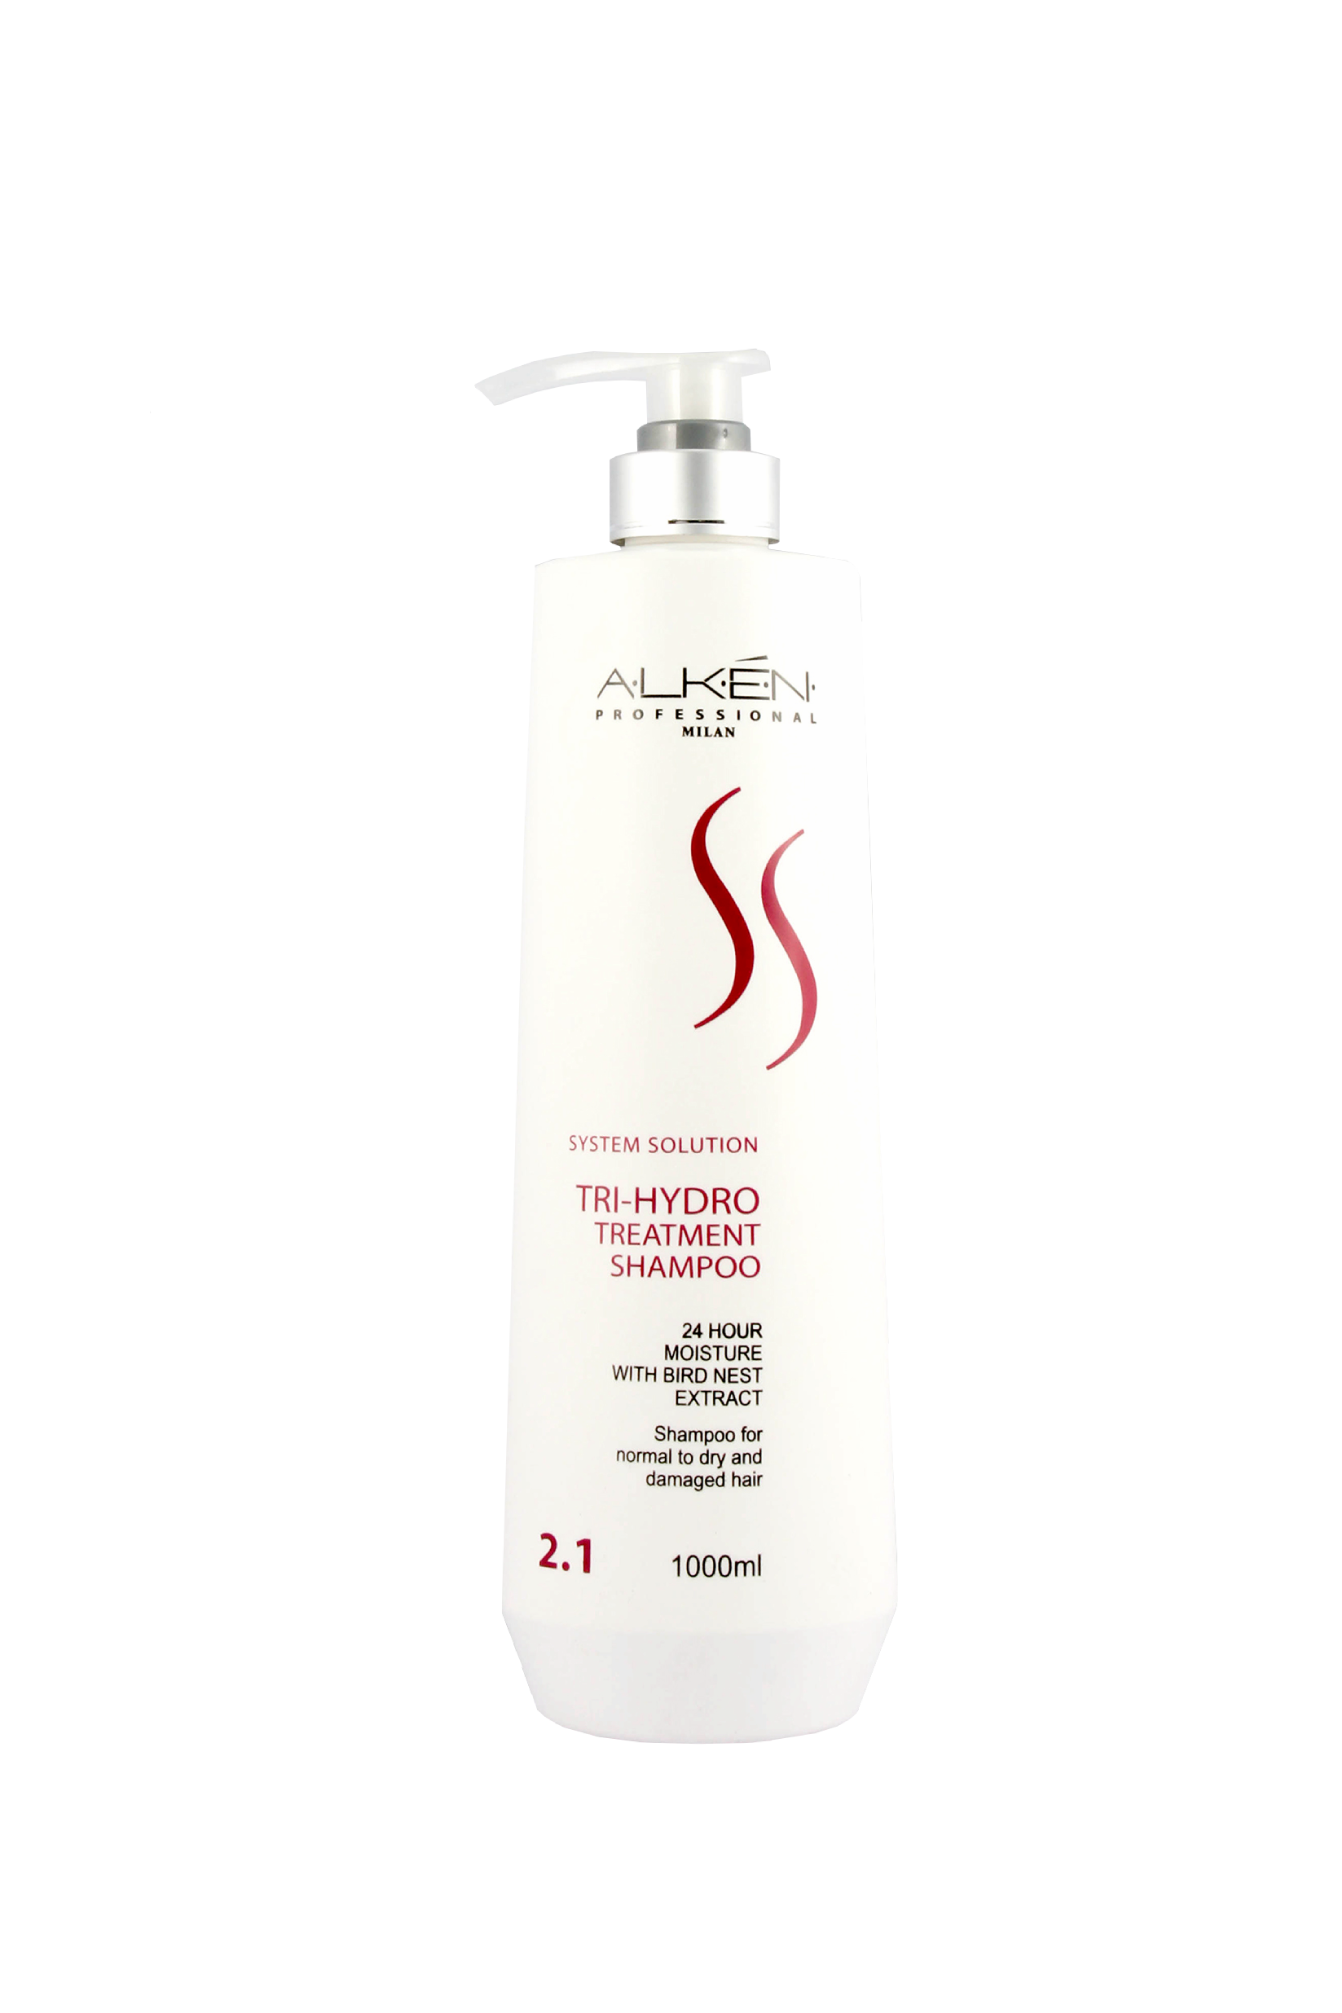 Alken Professional Tri-Hydro Treatment Shampoo 2.1